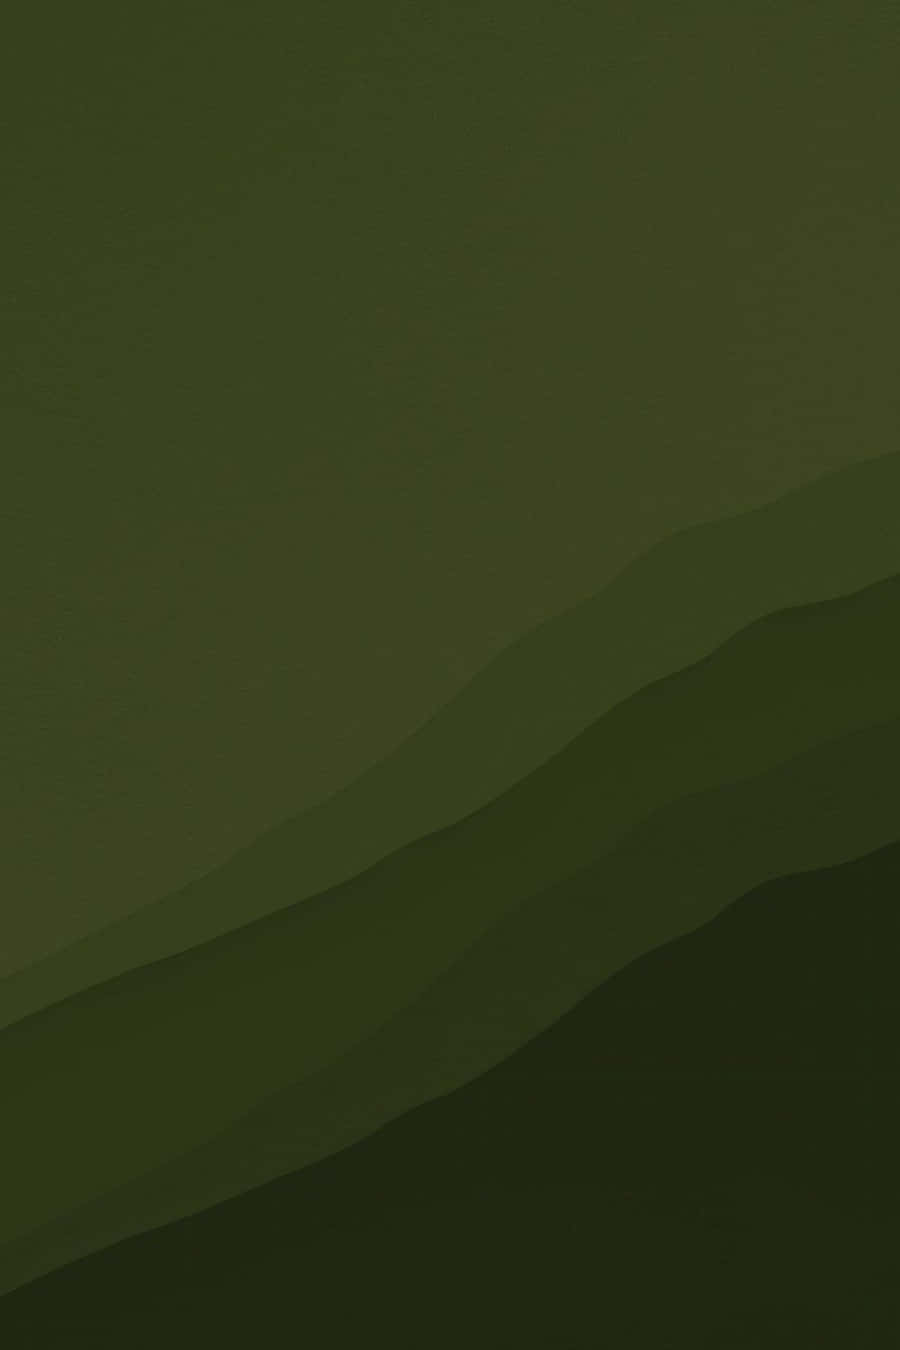 Plain Dark Green With Slanting Curve Wallpaper